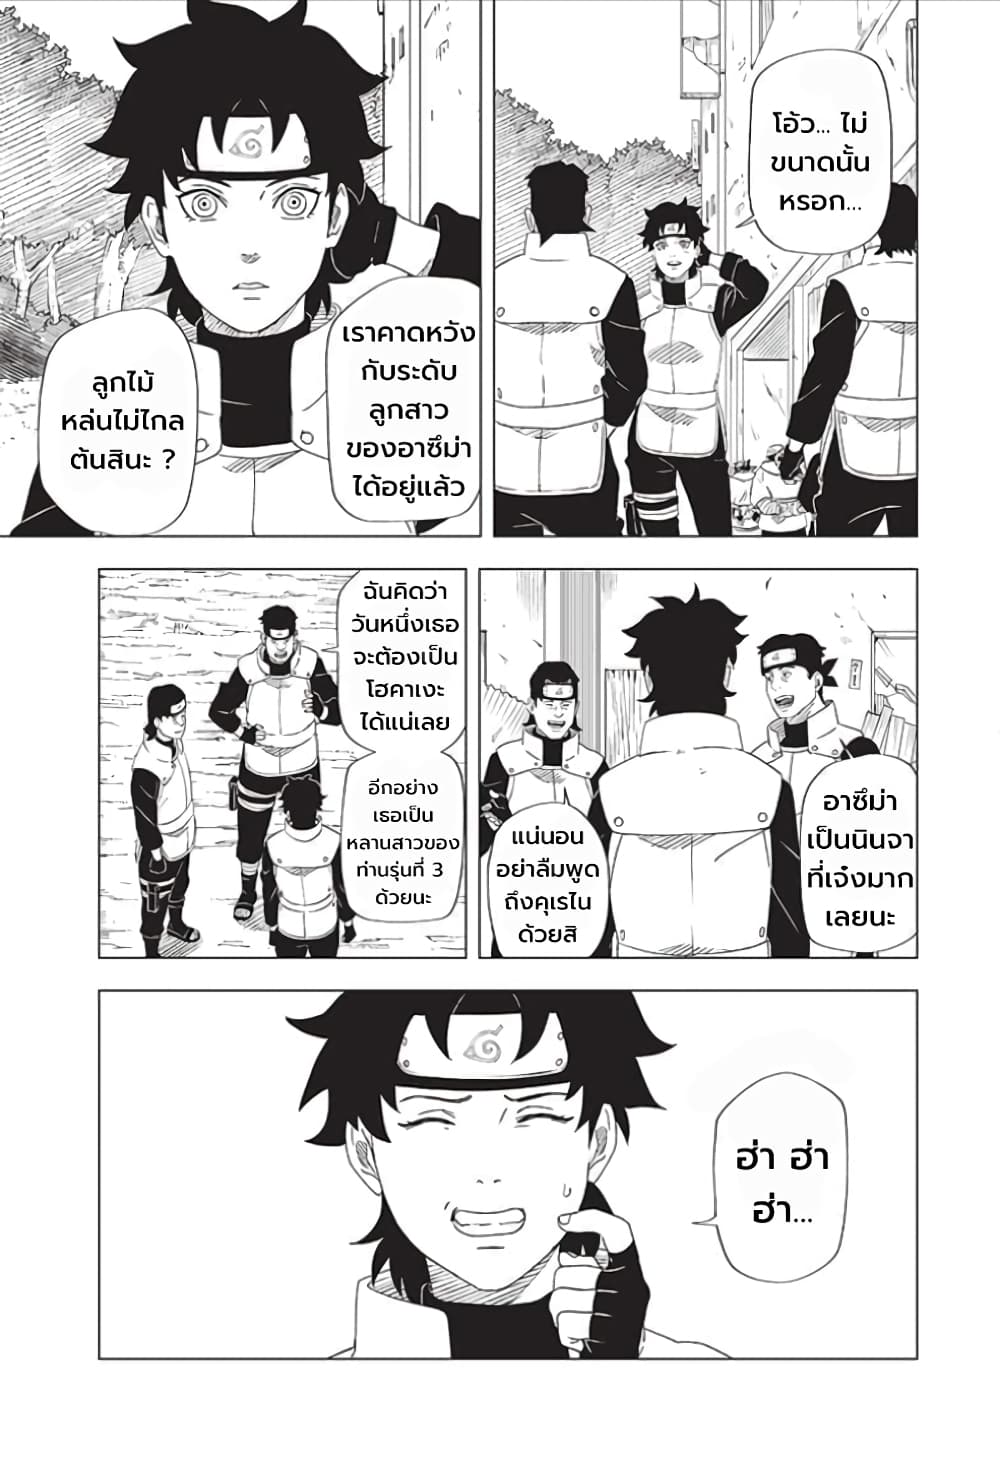 Naruto Konoha’s Story – The Steam Ninja Scrolls The Manga 2 09